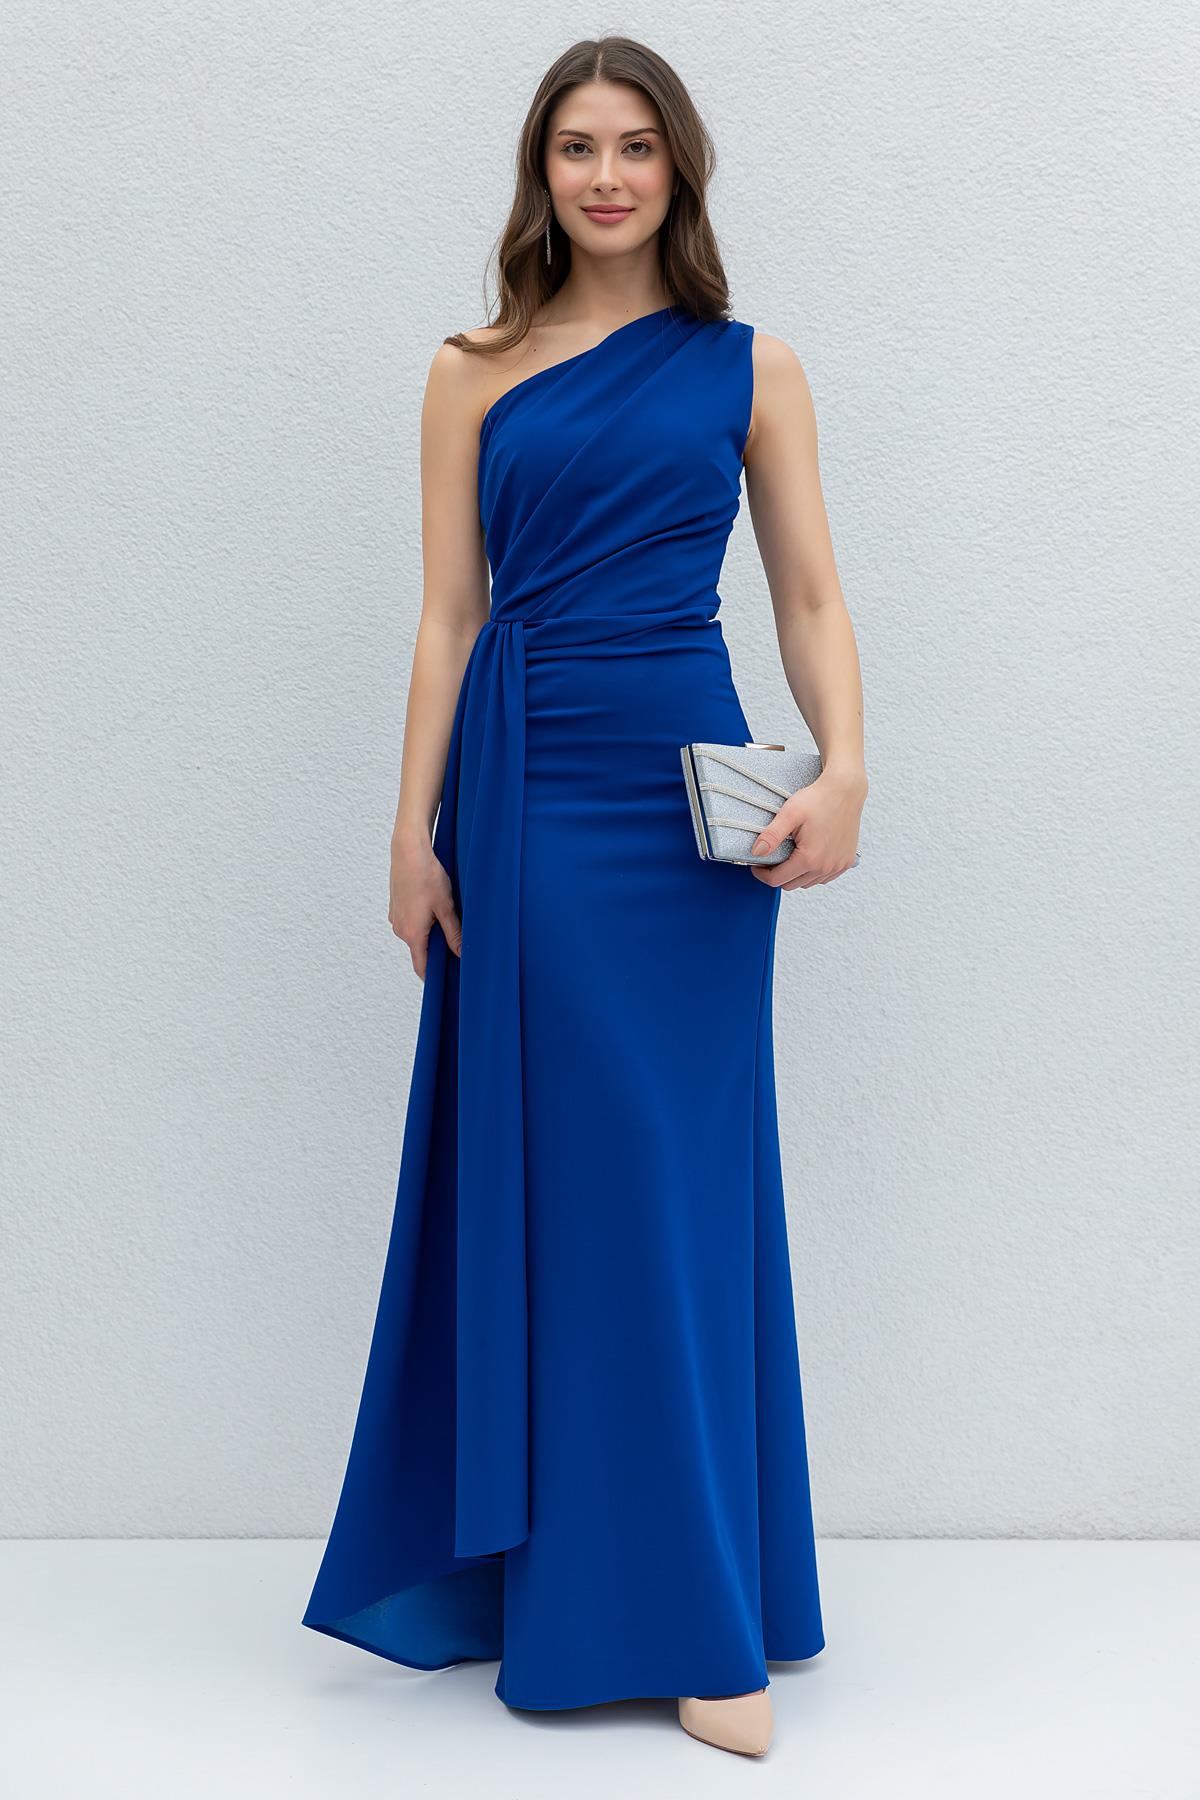 One Shoulder Evening Dress - DARK BLUE - Lebbse